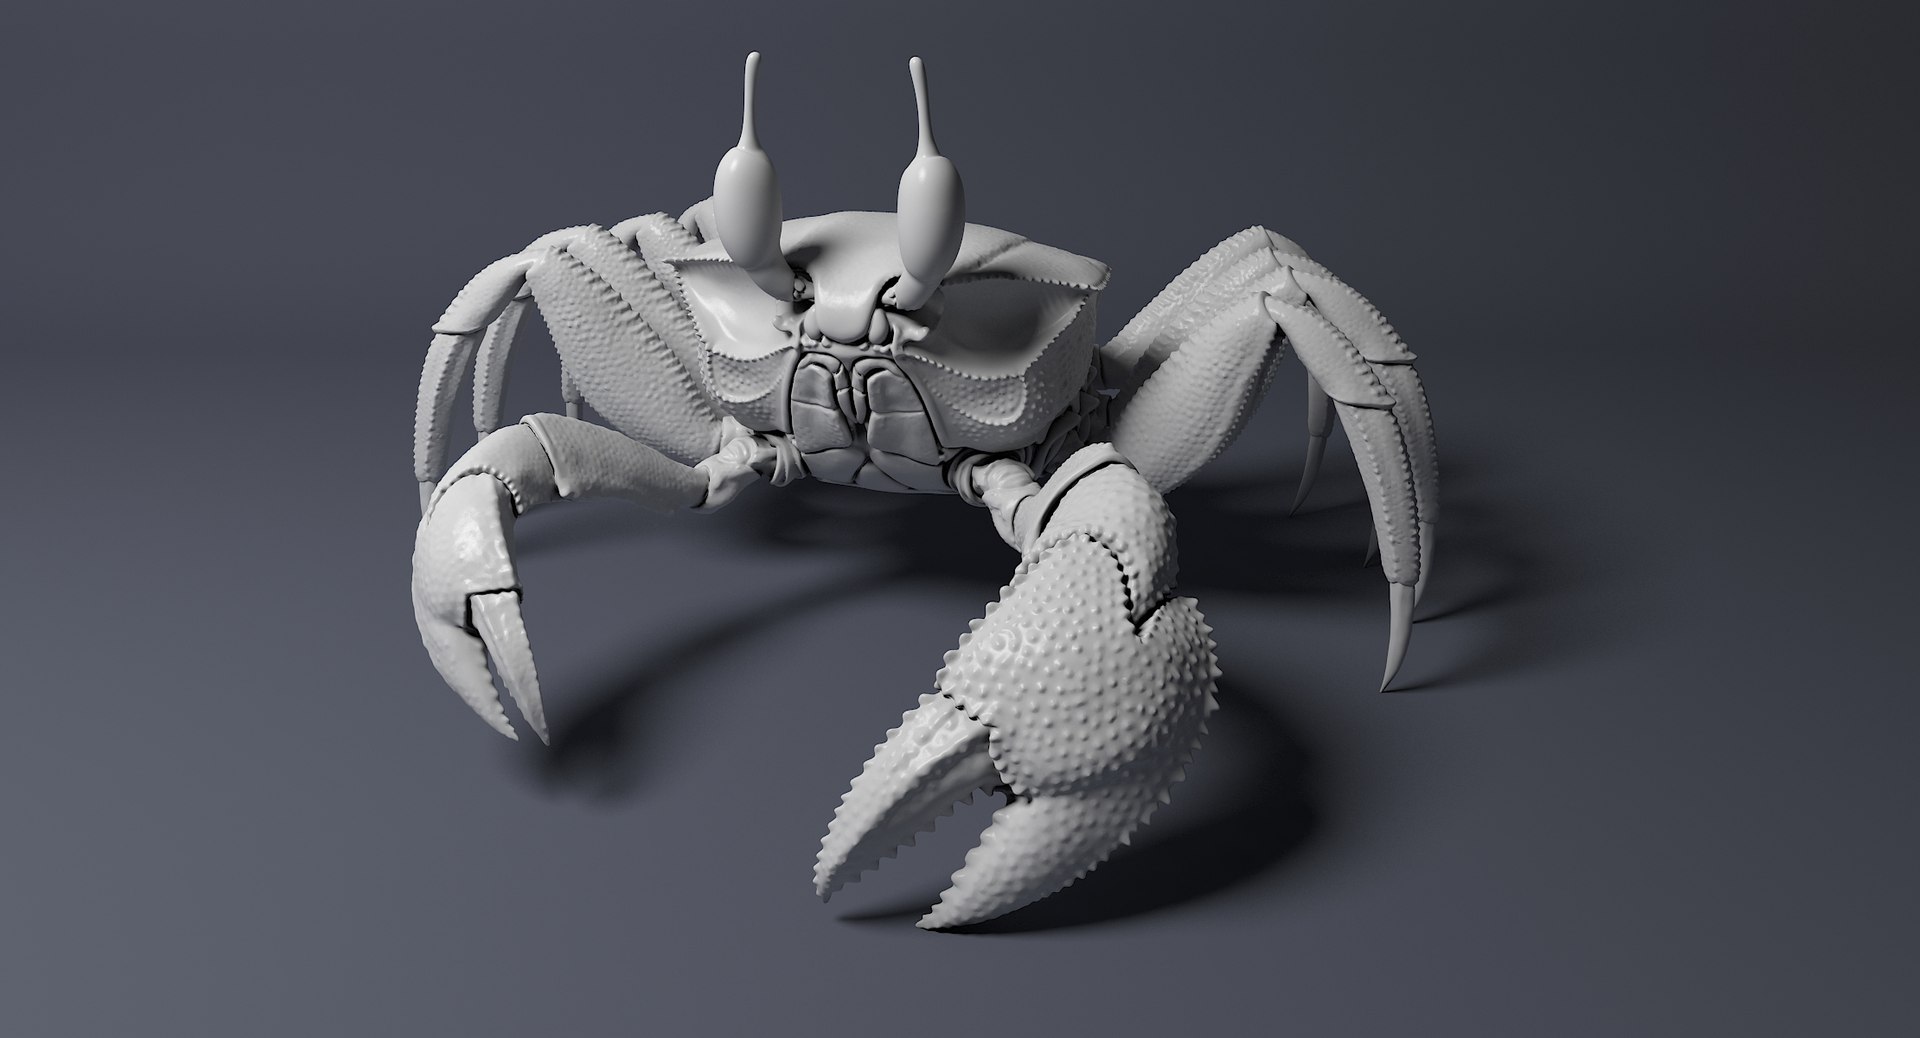 3d ghost crab model https://p.turbosquid.com/ts-thumb/Su/9TIFpR/9mWtlcnq/crab_main02/jpg/1436798190/1920x1080/fit_q87/23b27f2eacb70dc20783033b8fc66e19ad512de1/crab_main02.jpg